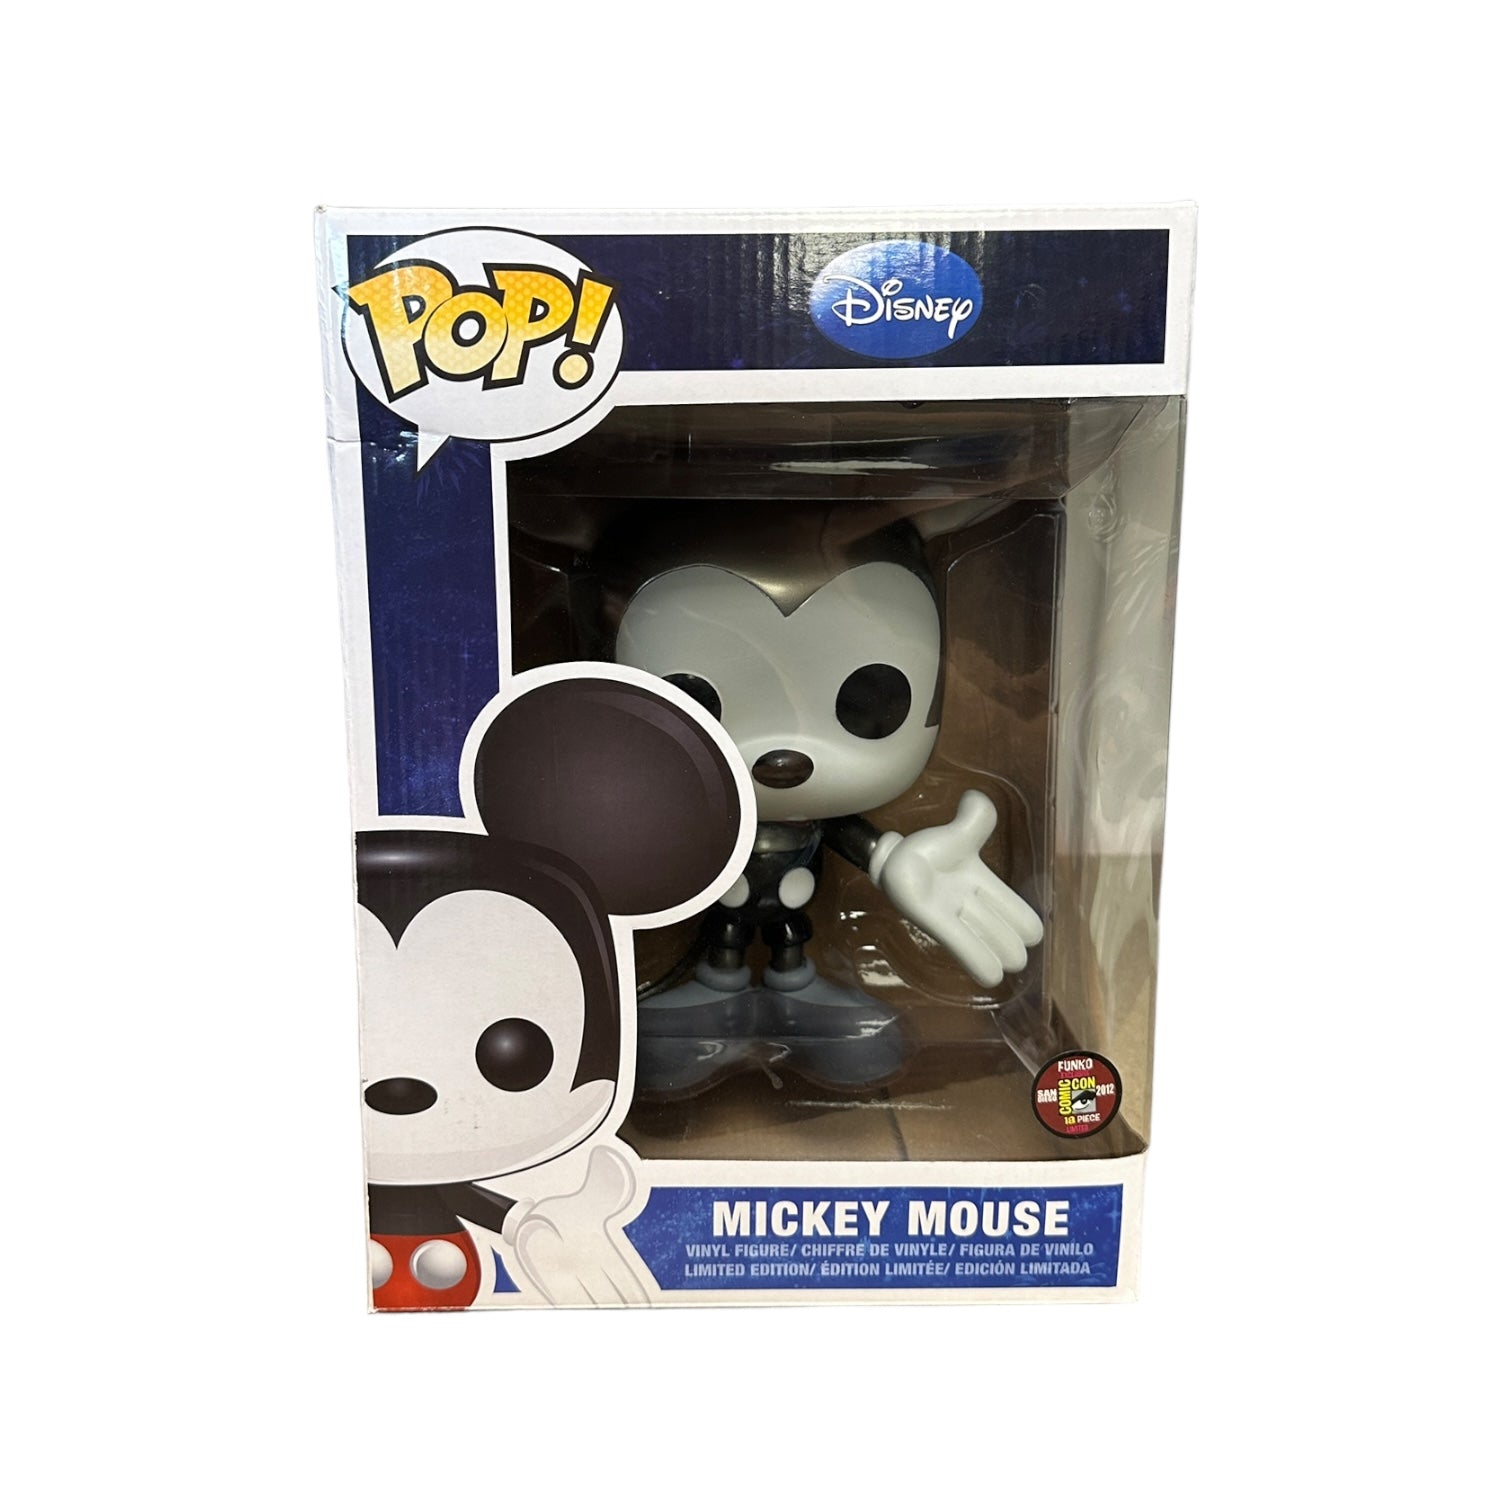 Mickey Mouse (Black & White) 9" Funko Pop! - Disney - SDCC 2012 Exclusive LE18 Pcs - Condition 6.5/10